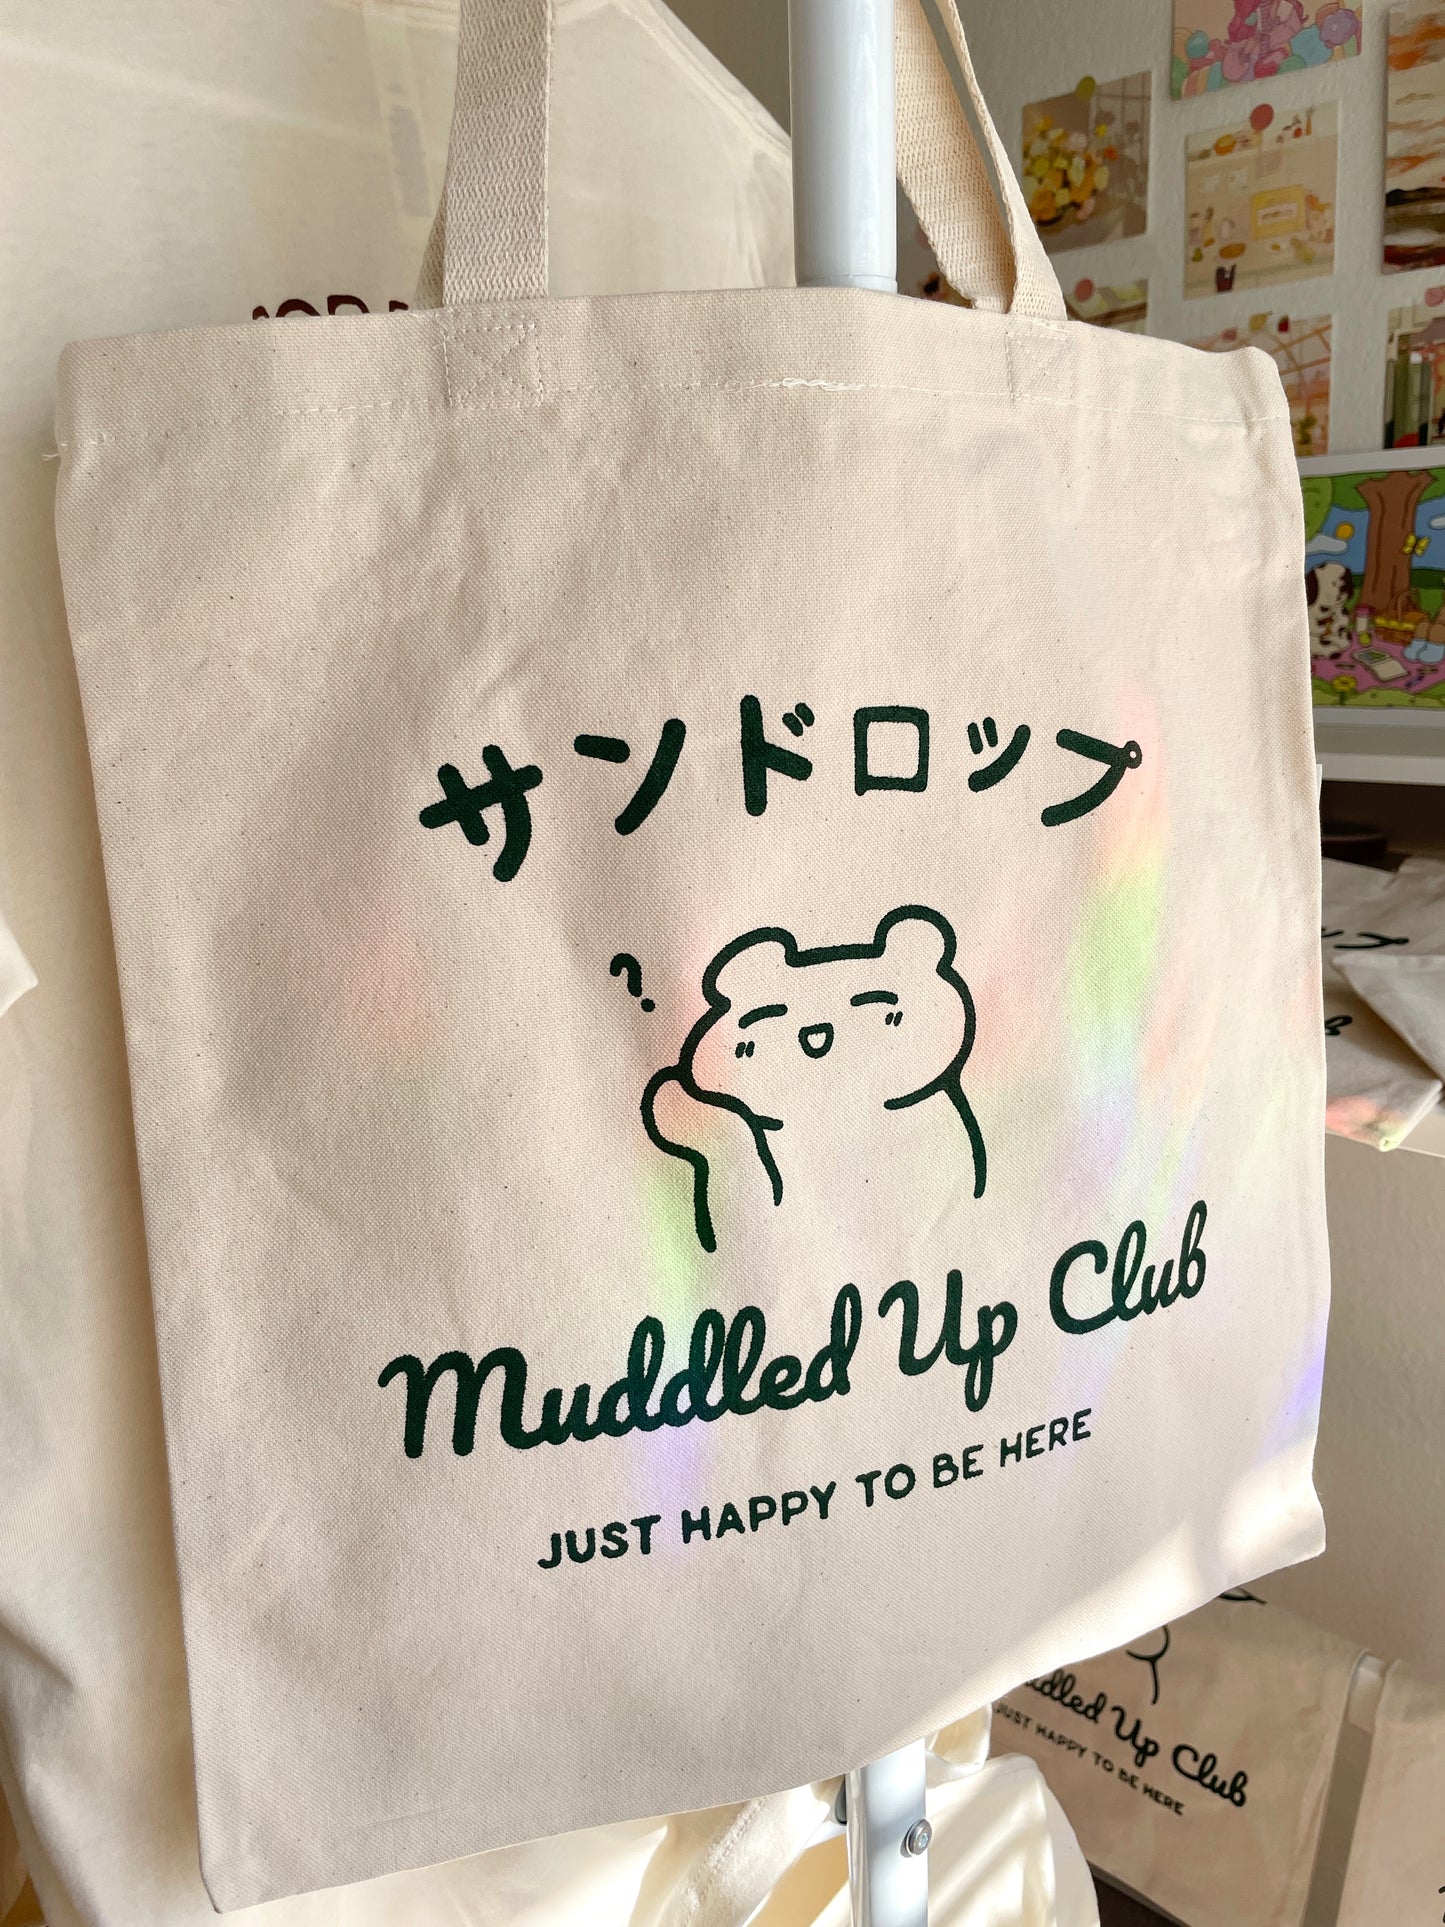 Muddled-Up Club Tote Bag